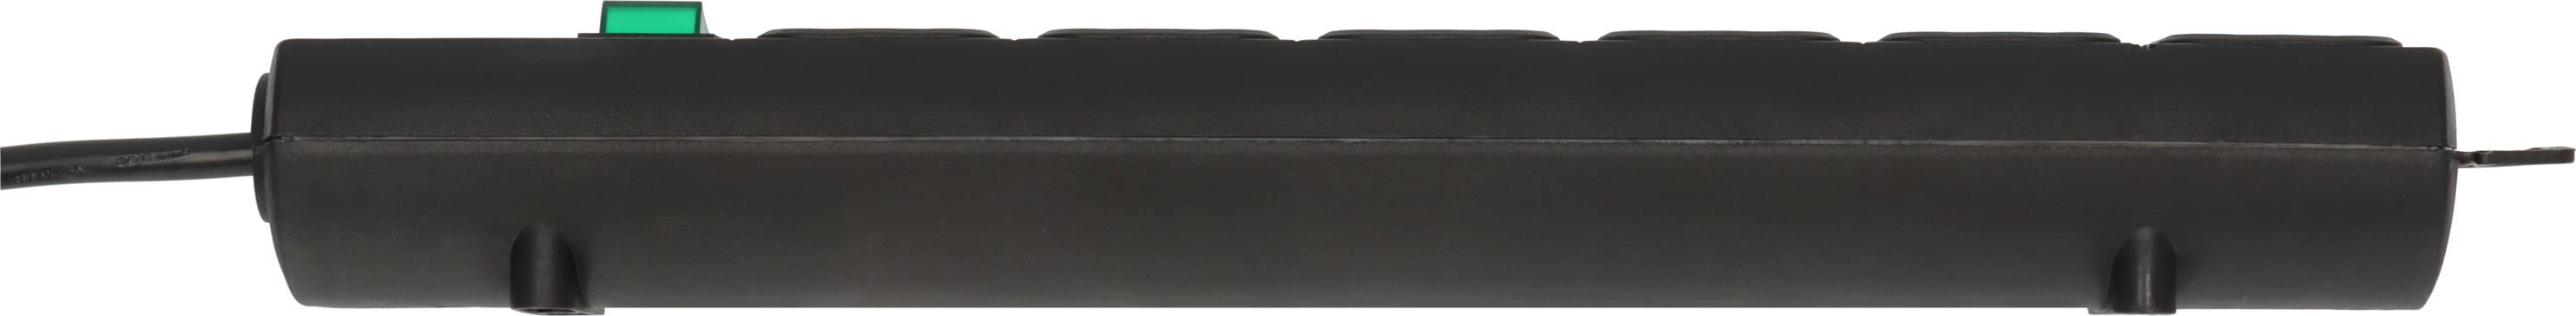 Regleta Comfort-Line Plus con pestañas enchufes 4 negro 2m H05VV-F 3G1,5